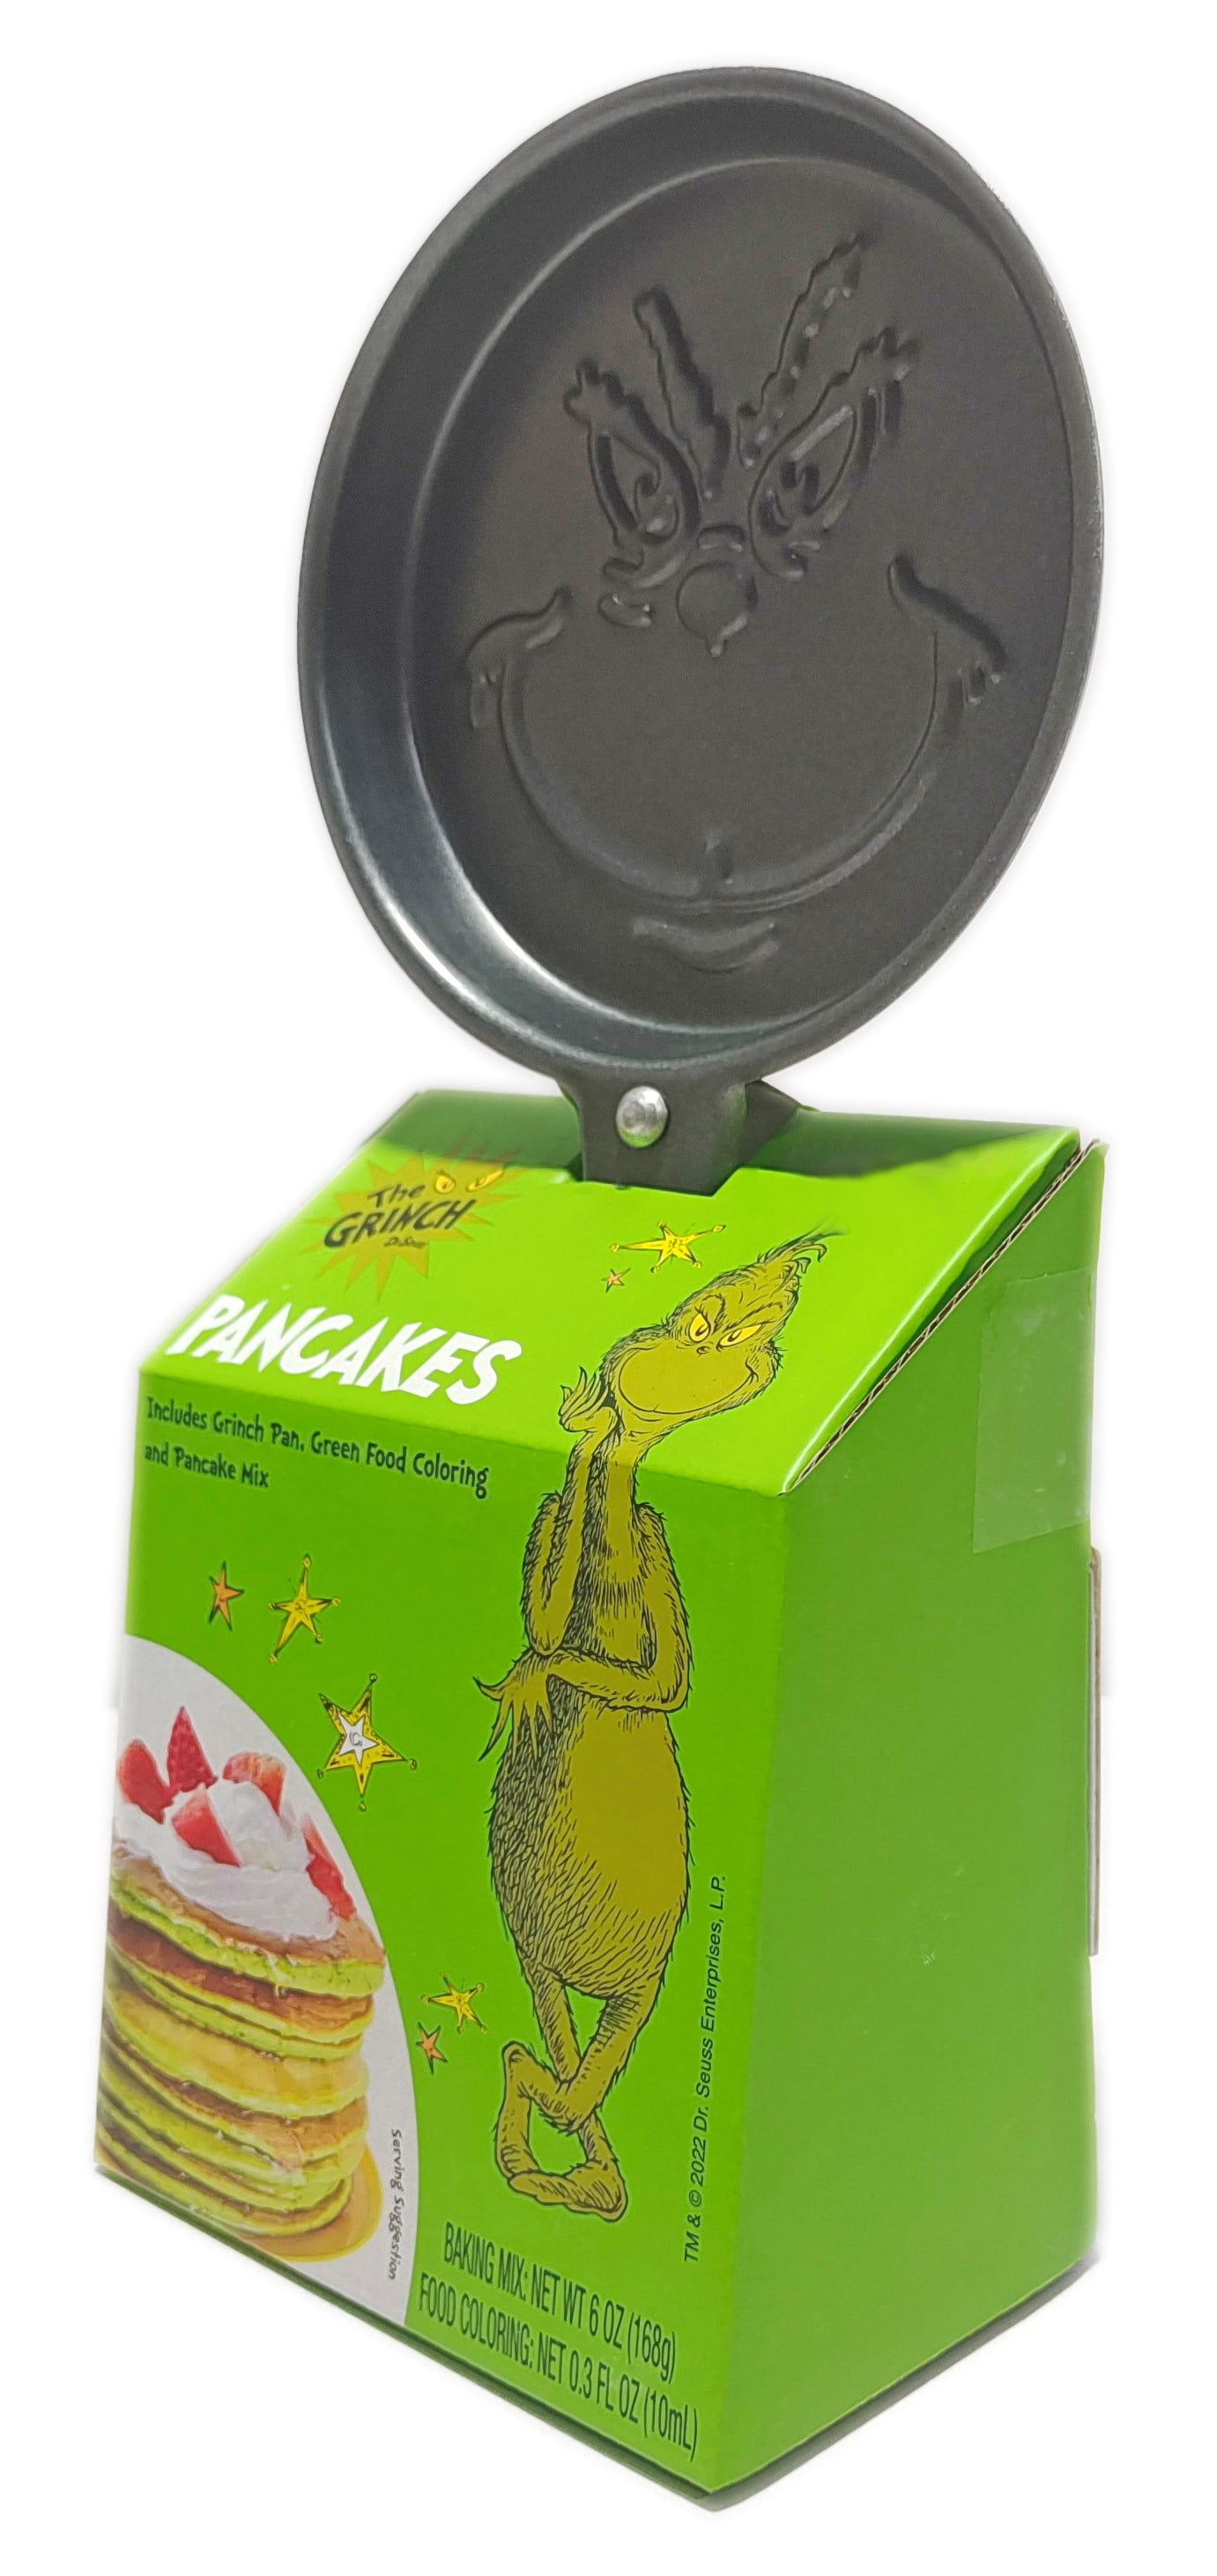 Dr. Seuss The Grinch Holiday round pancake pan with pancake mix